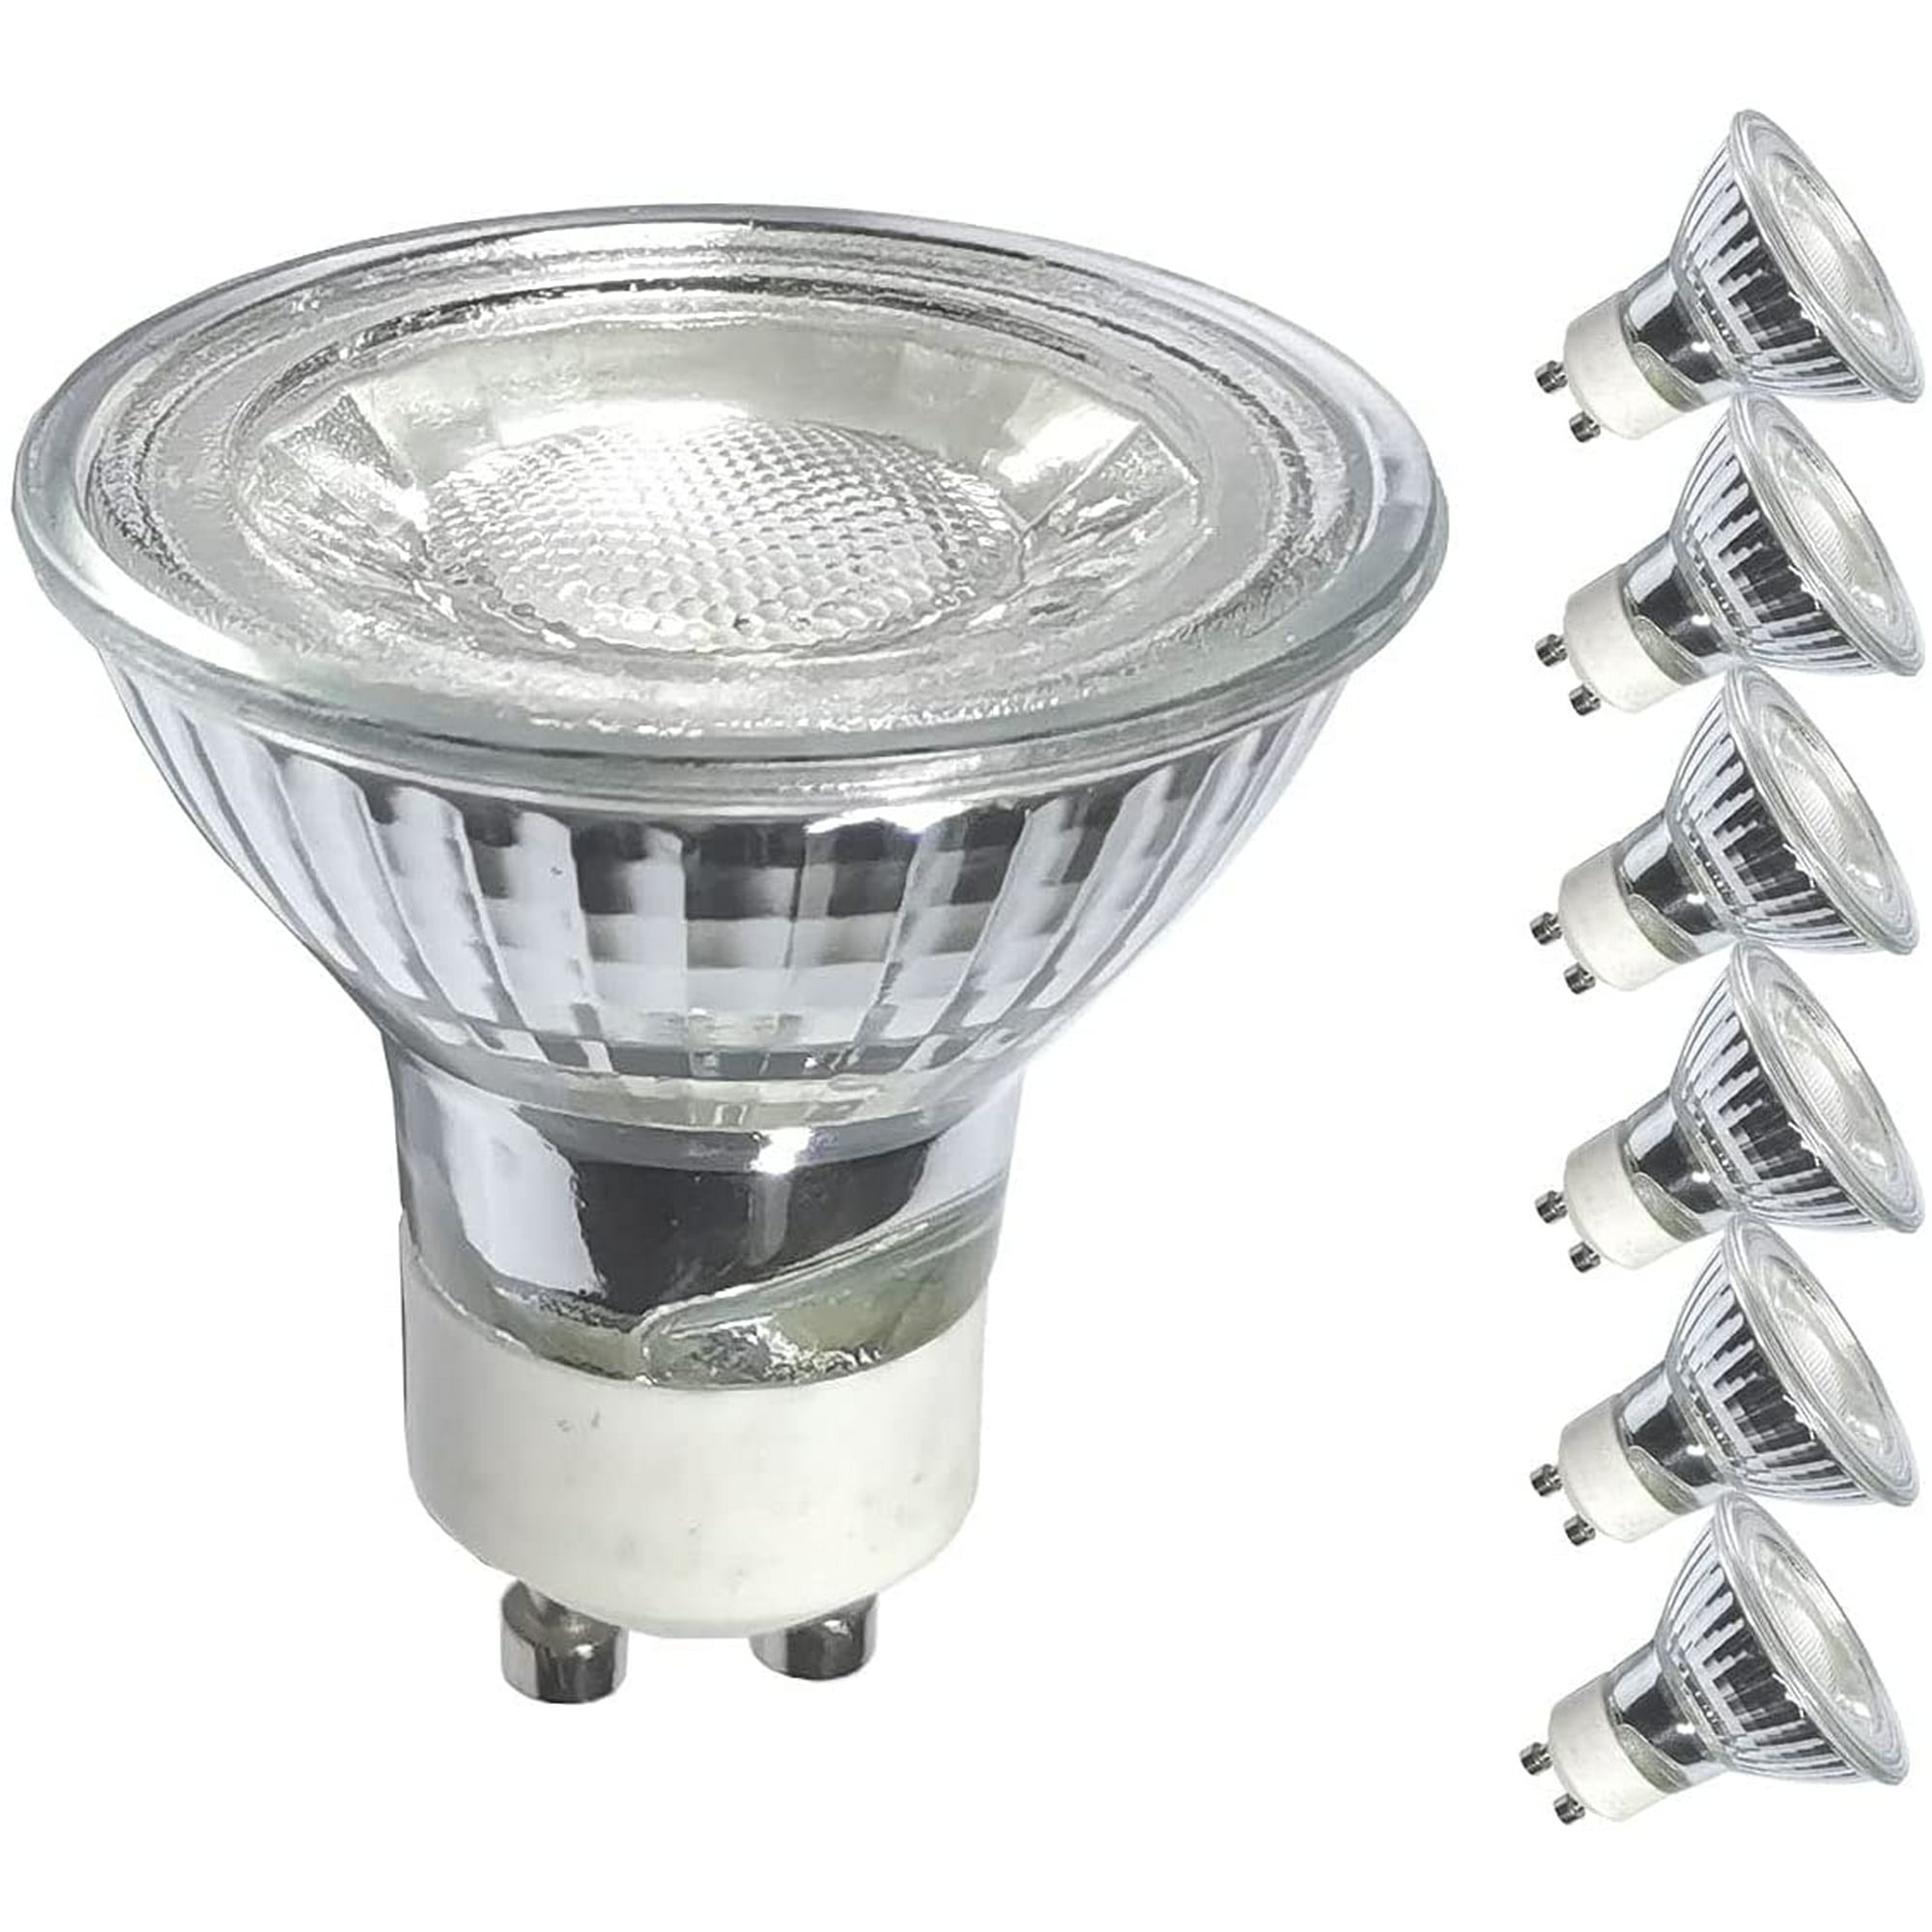 LED Light COB Spotlight 35w 50W Halogen Equivalent 3000K Soft Warm White 3 Watt 250lm 38 Degree Beam Angle LED Flood Bulbs Replacement Light,Non Dimmable (3000k,GU10,Pack 6)